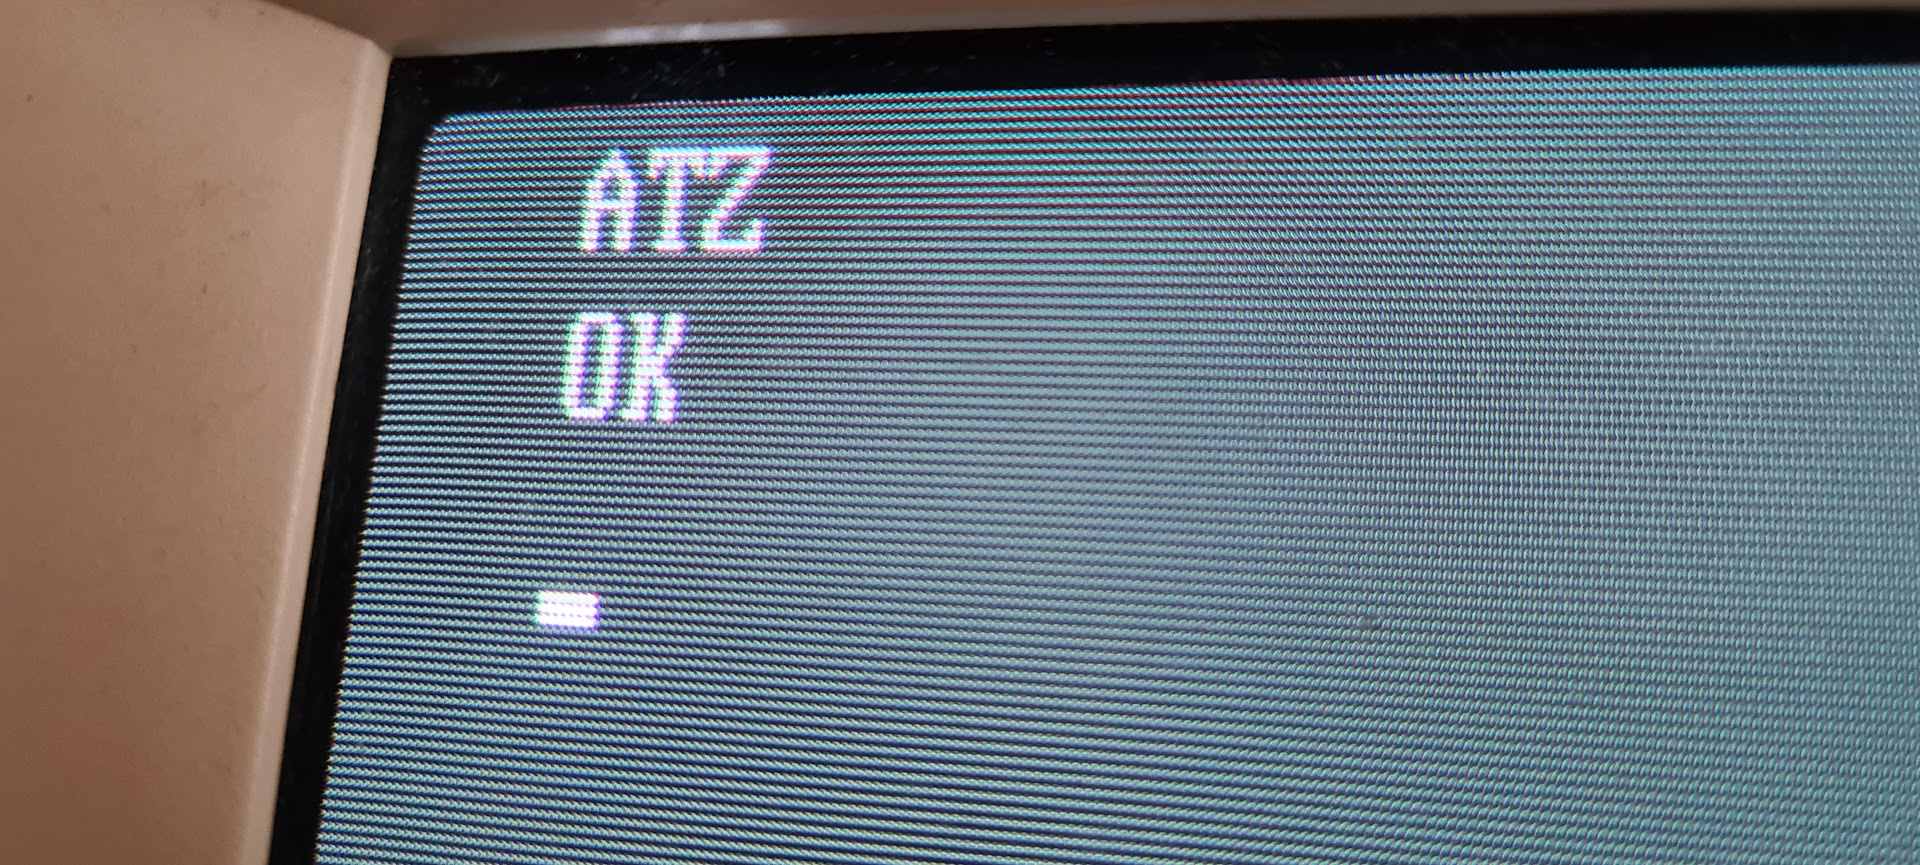 ATZ, OK!